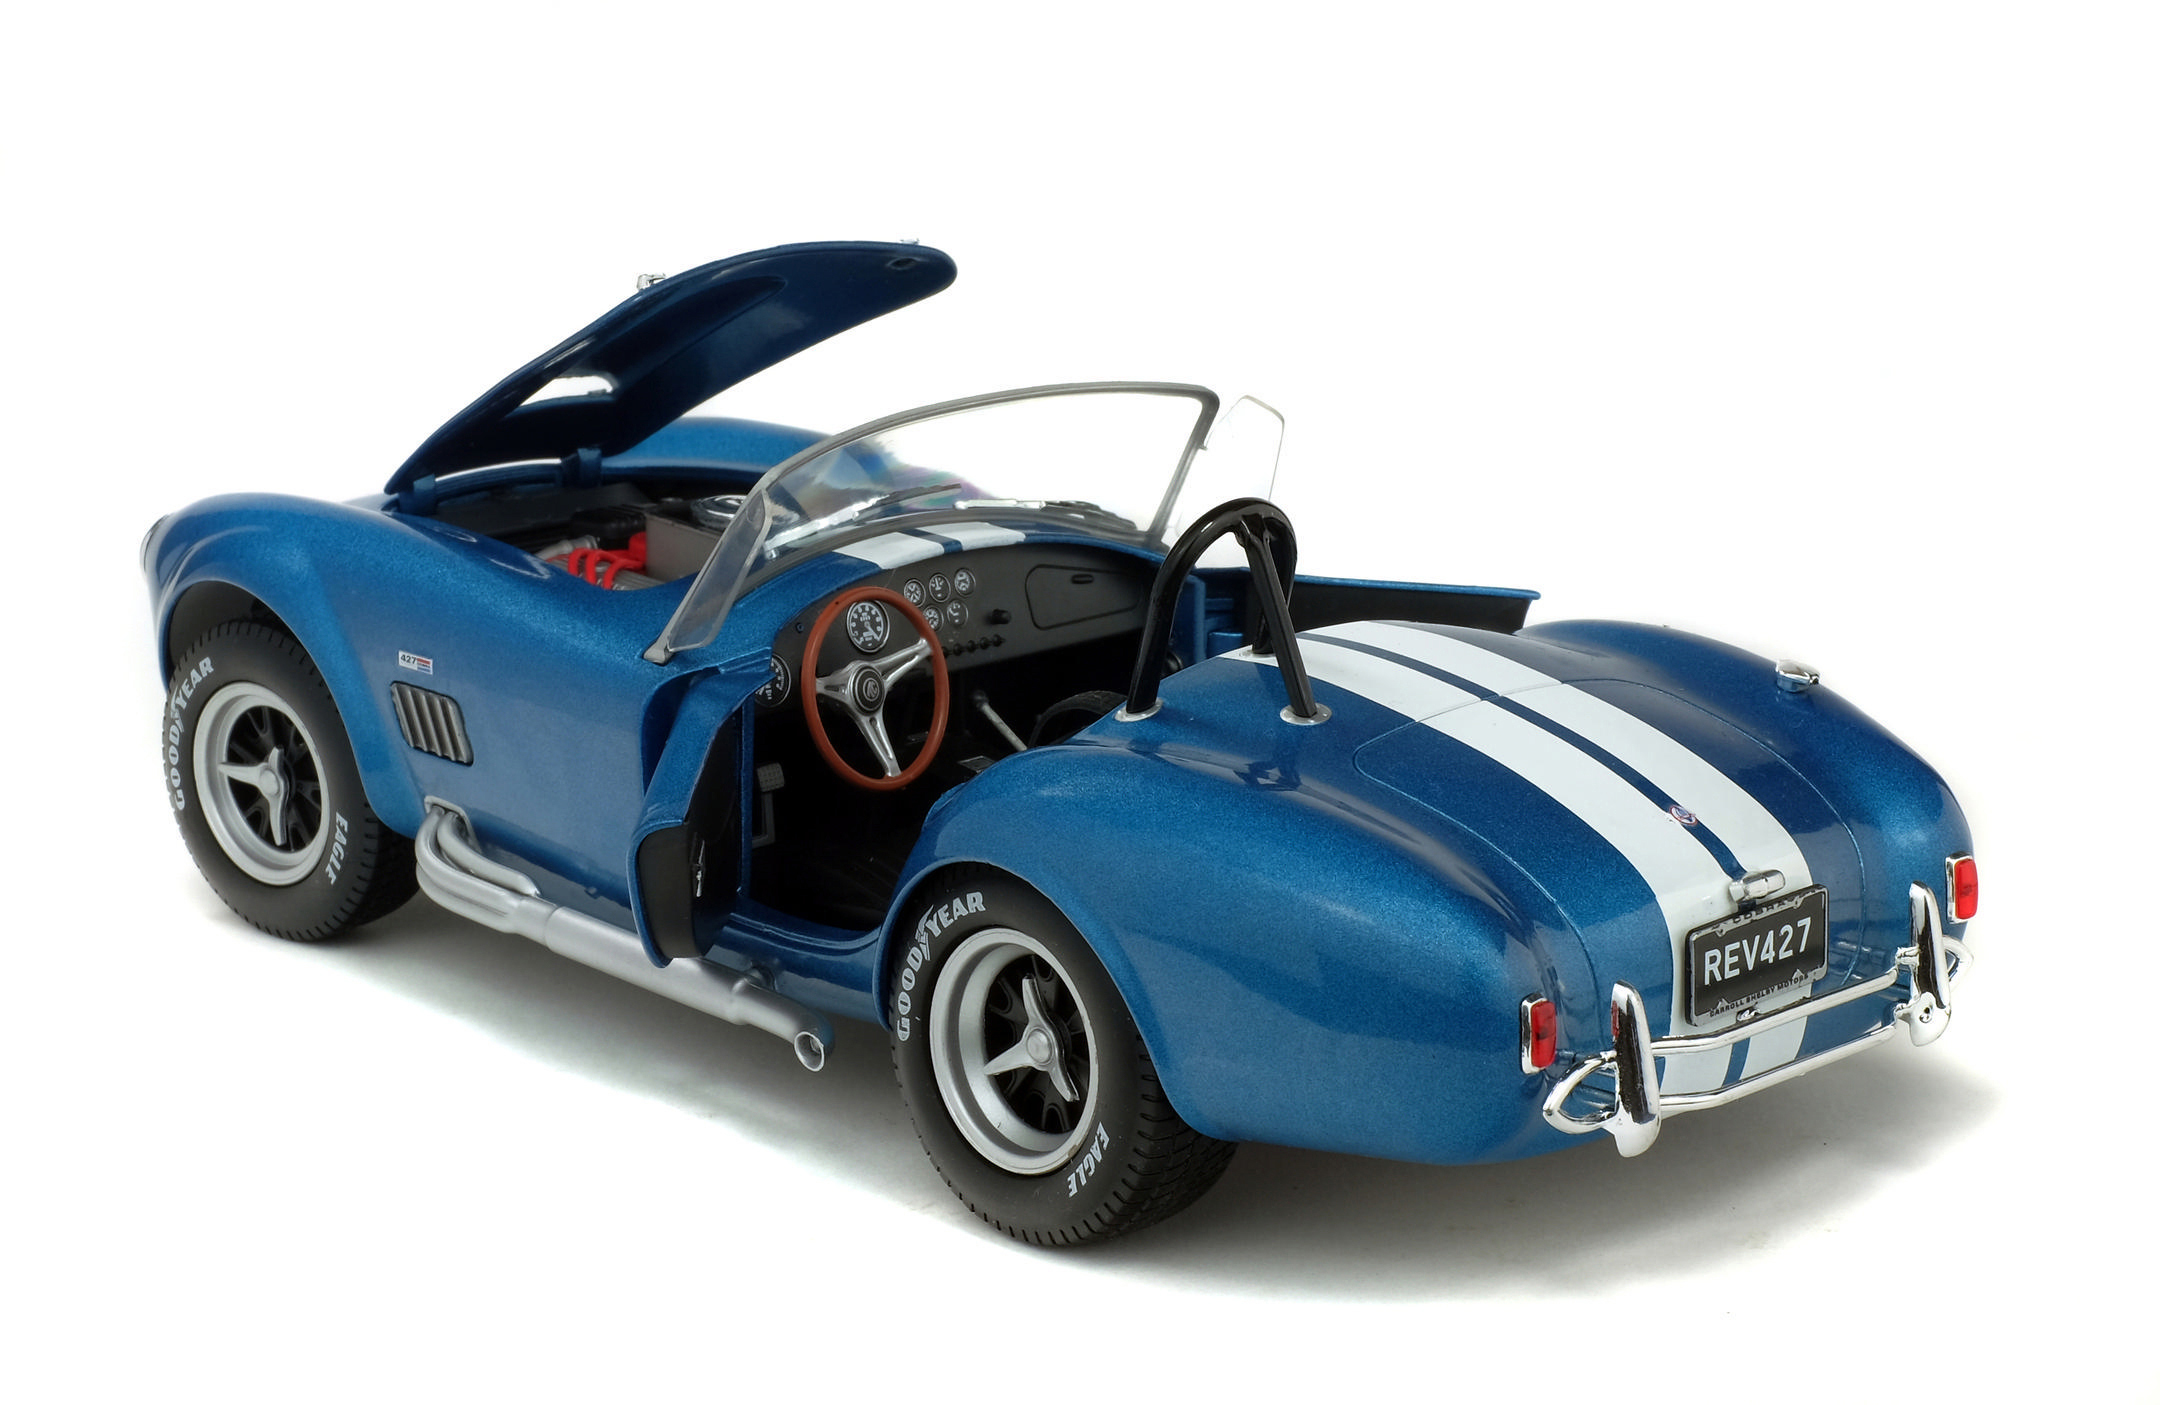 MKII, Baujahr 427 Cobra blau Spielzeugmodellauto metallic 1965, 1:18, AC Maßstab Metallic/Blau Modellauto, SOLIDO